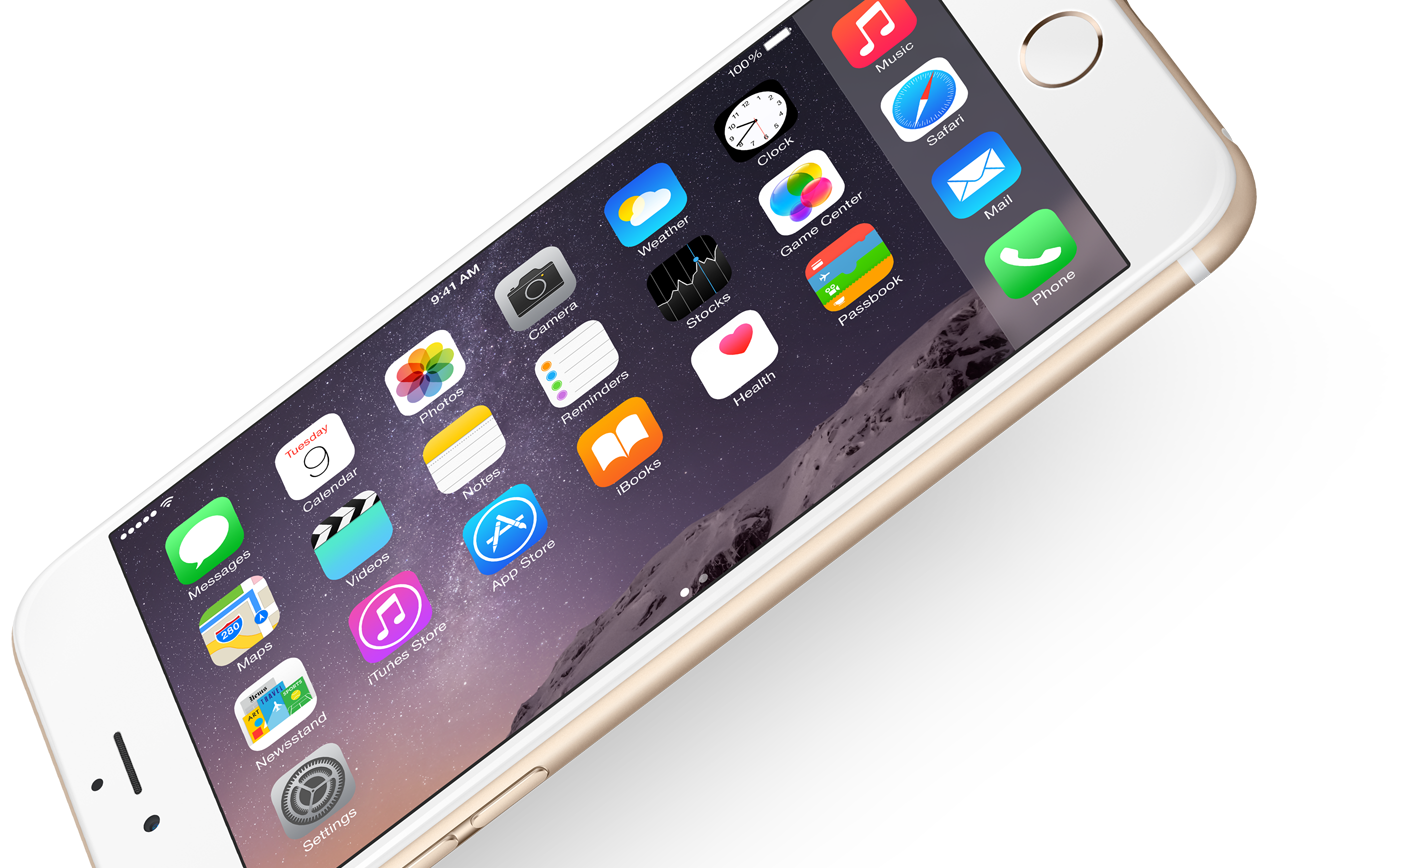 Обзор Apple iPhone 6 Plus: Full HD-экран, поддержка NFC и другие особенности гаджета